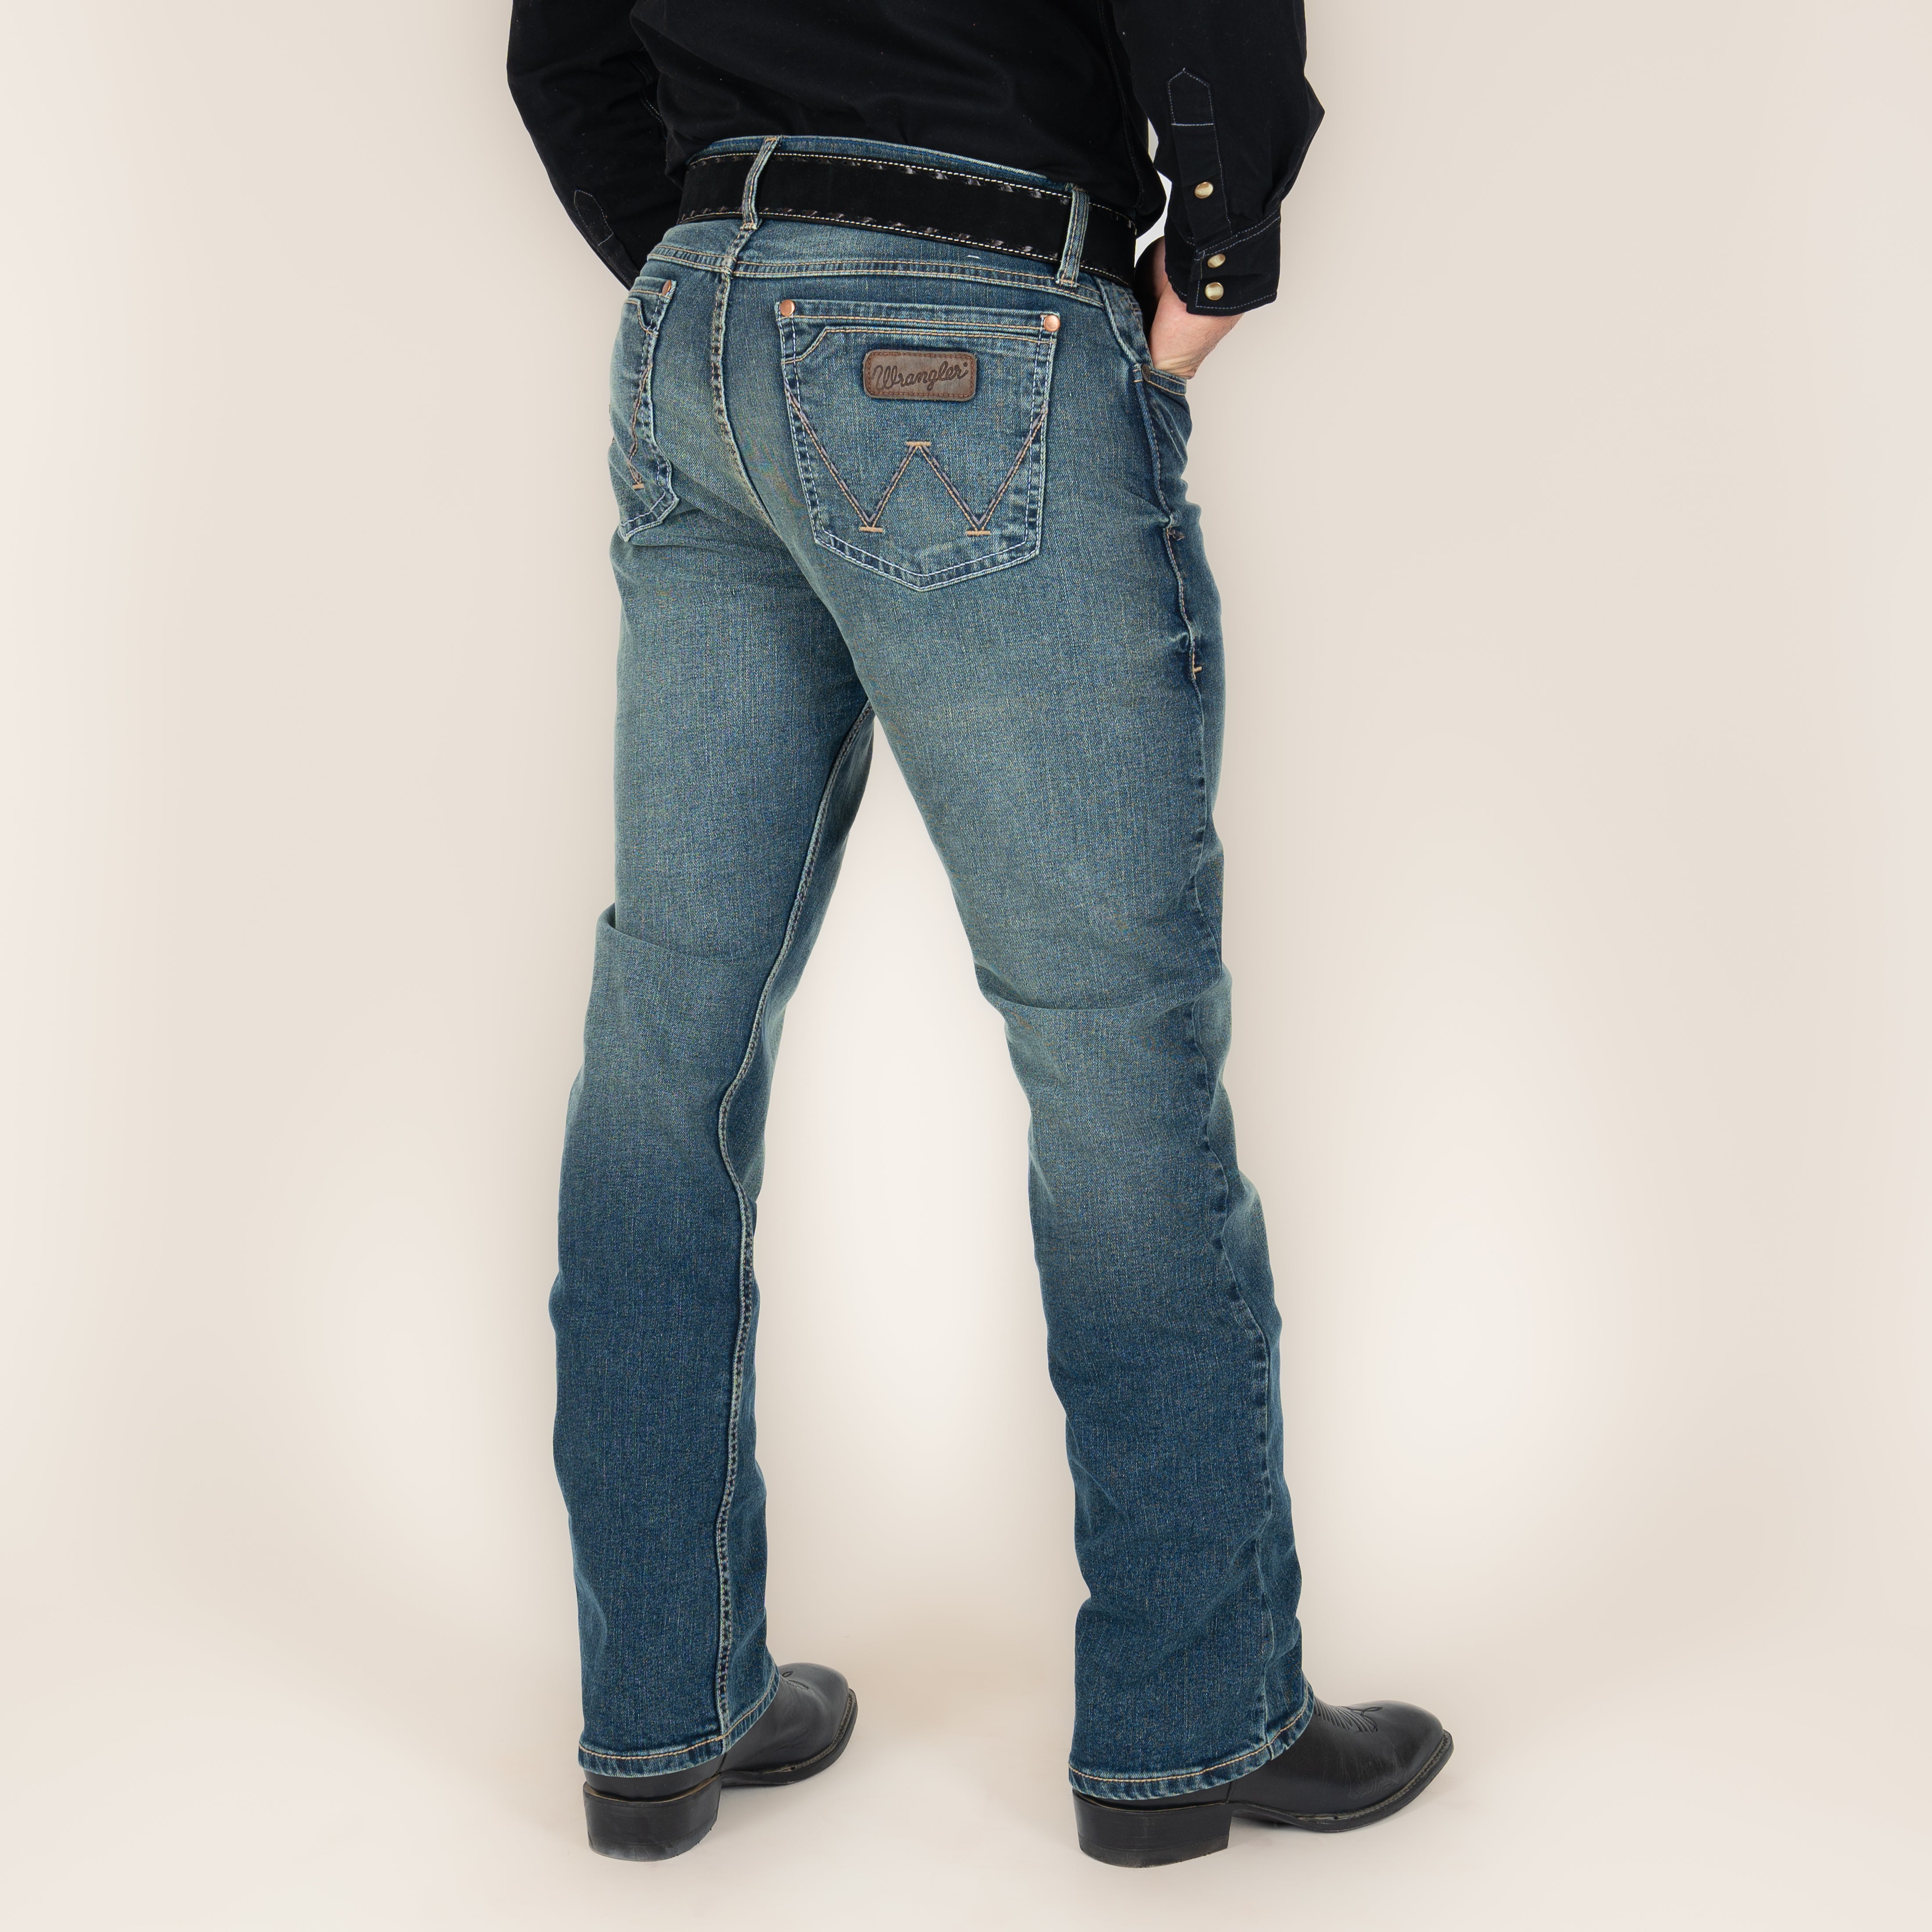 Jeans Wrangler Slim Boot Retro Caballero